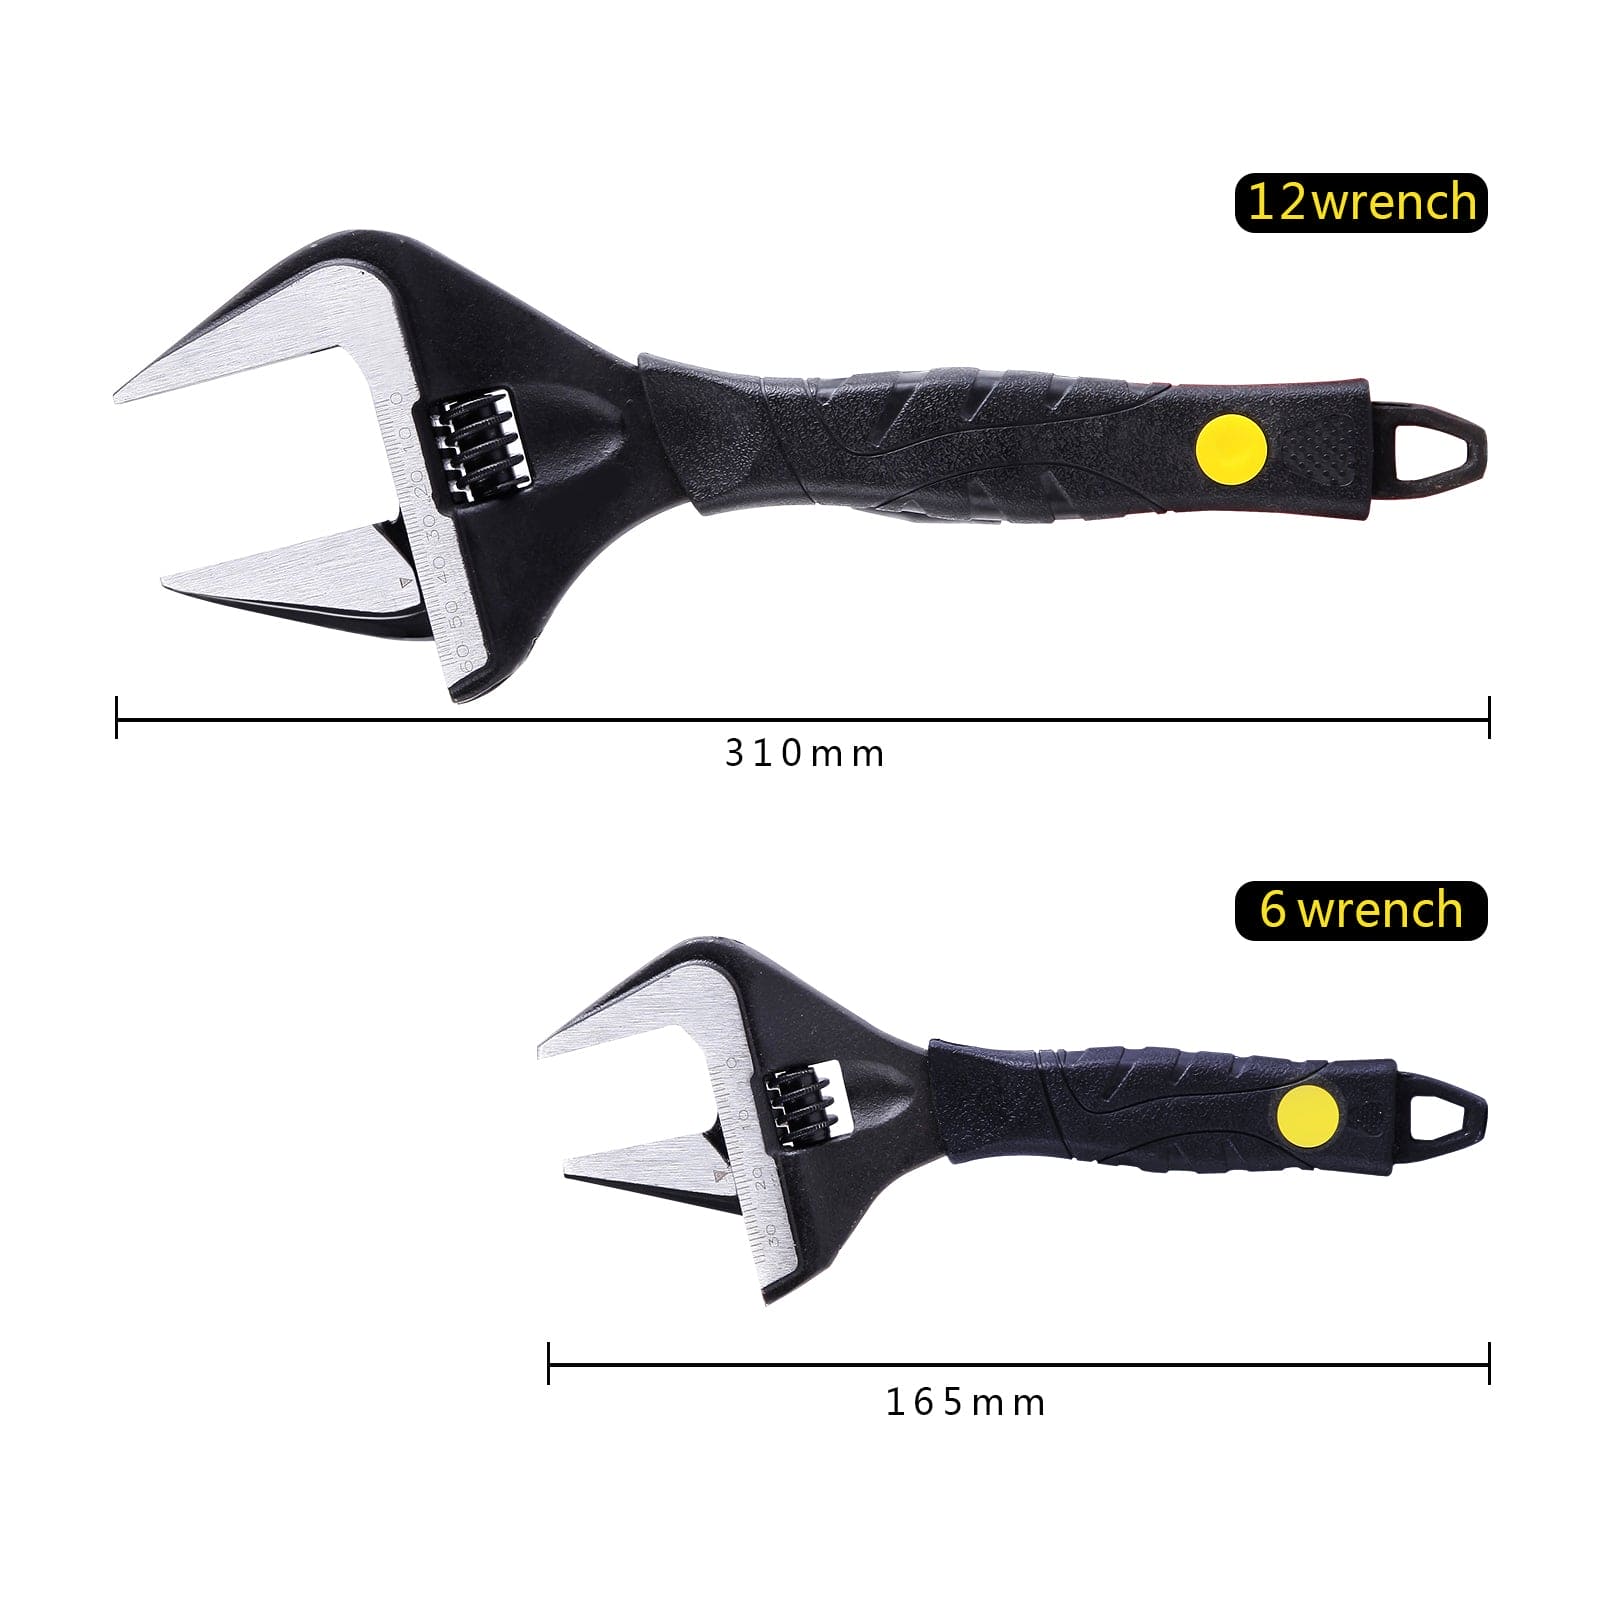 Sharp-tec Adjustable Wrench